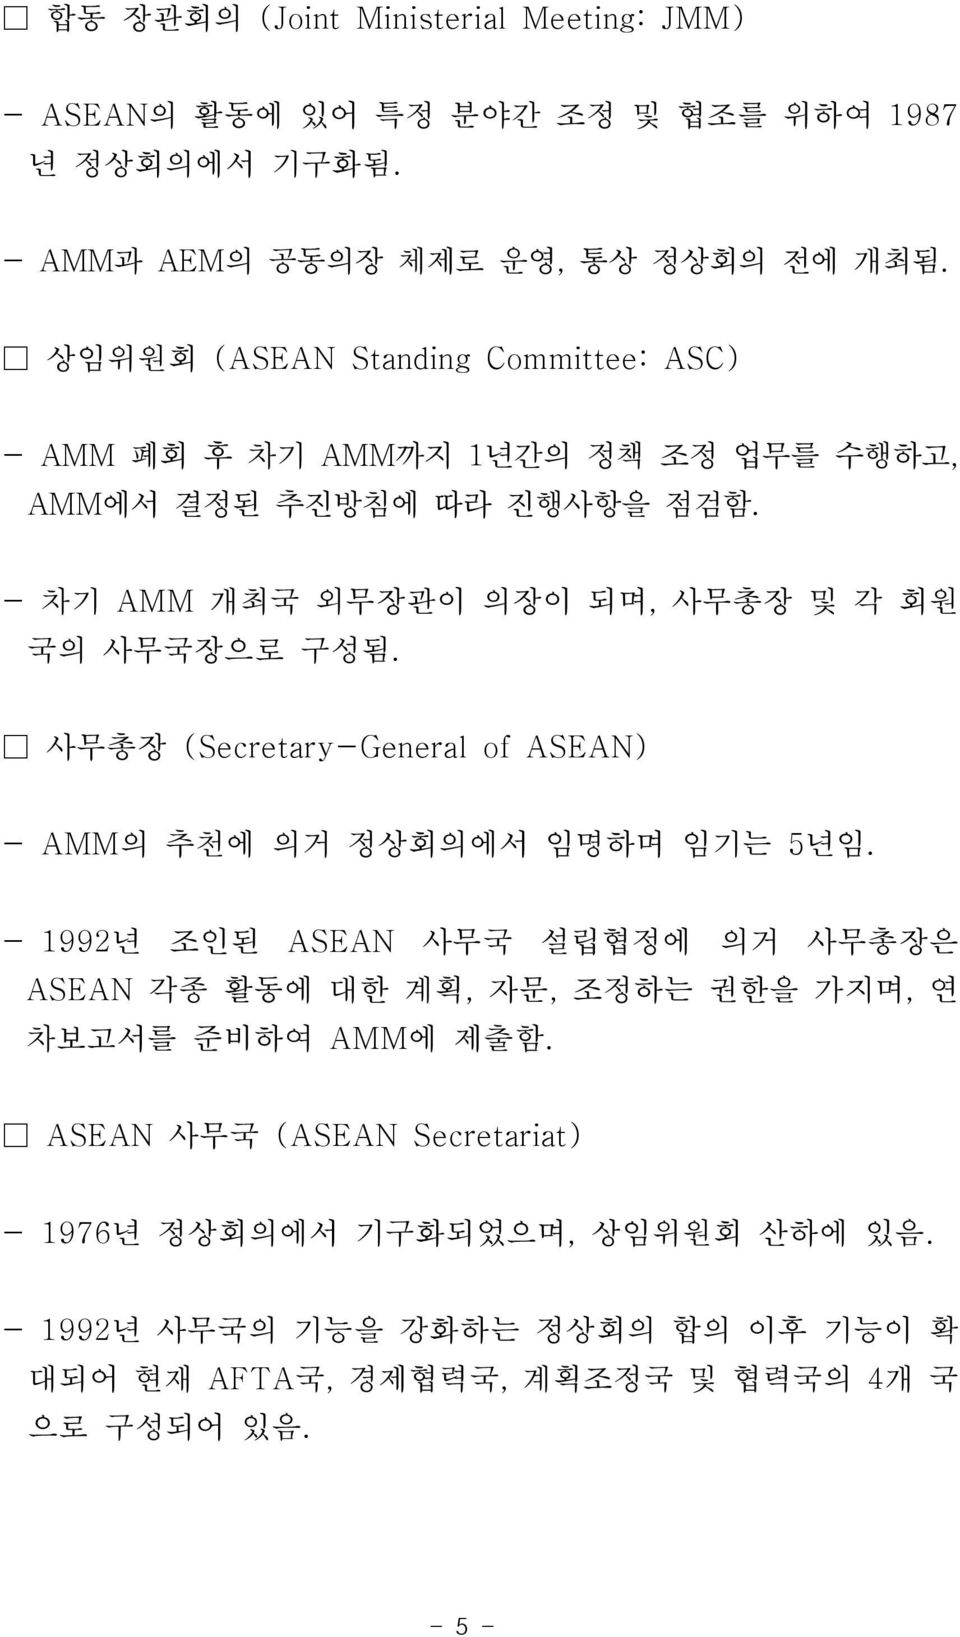 (Secretary-General of ASEAN) - AMM 5.